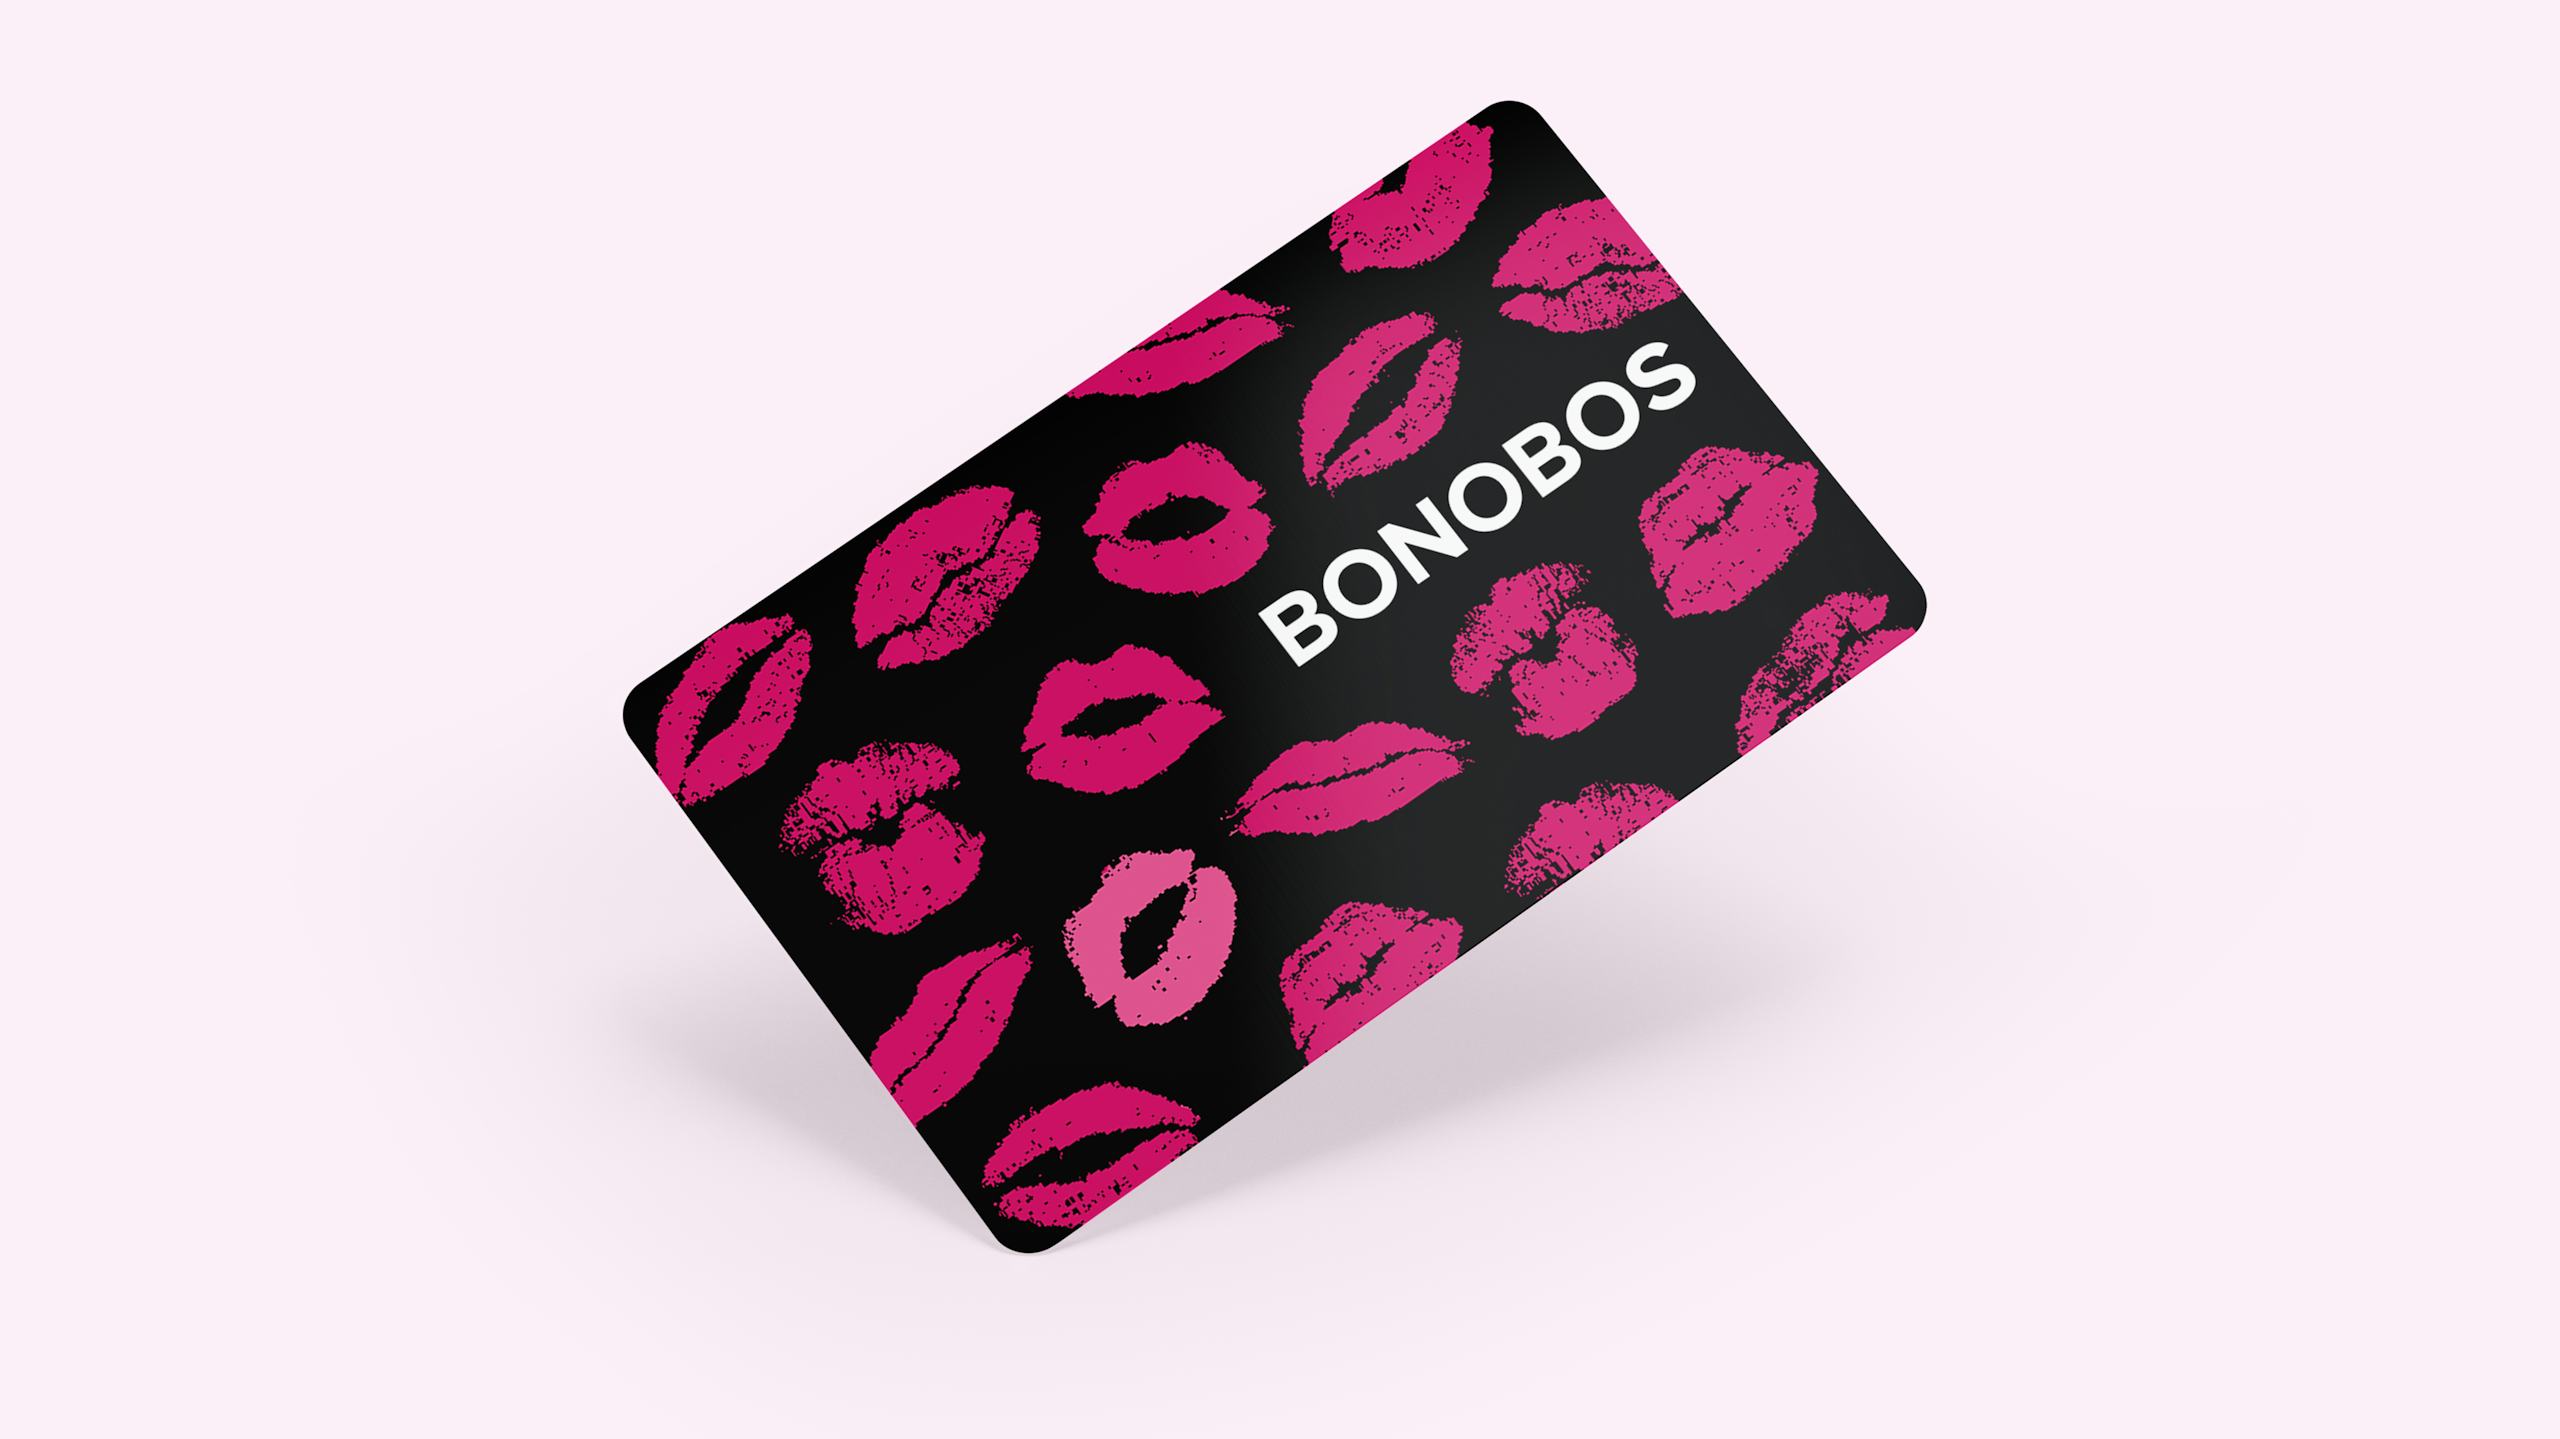 Bonobos Digital Gift Card with Pink Smooches print